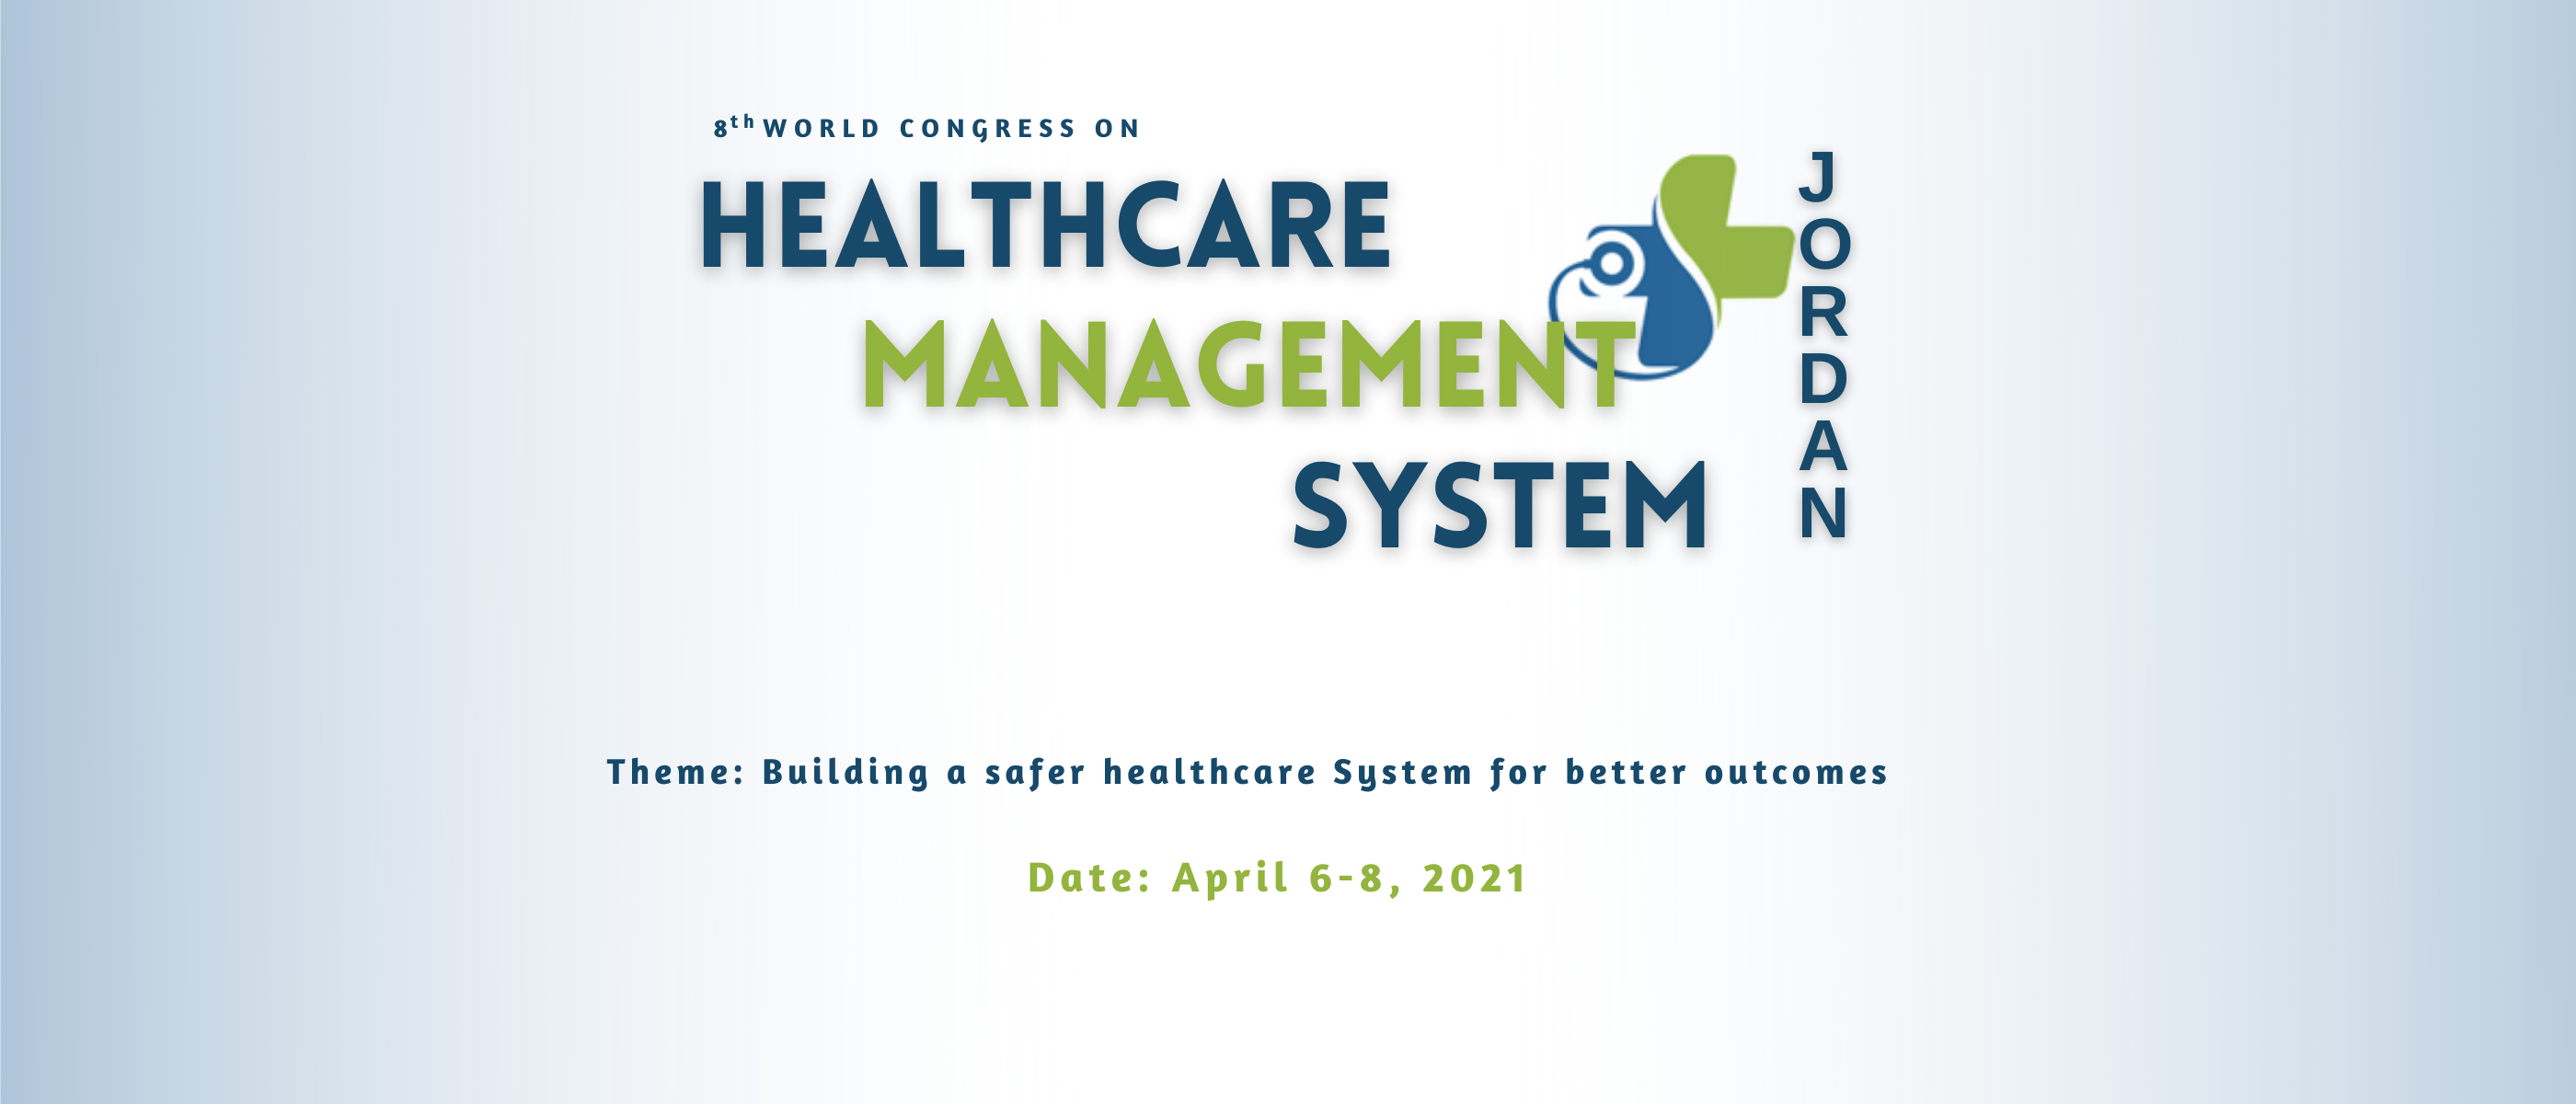 8th World Congress on Healthcare Management System, Amman, Jordan,Amman,Jordan